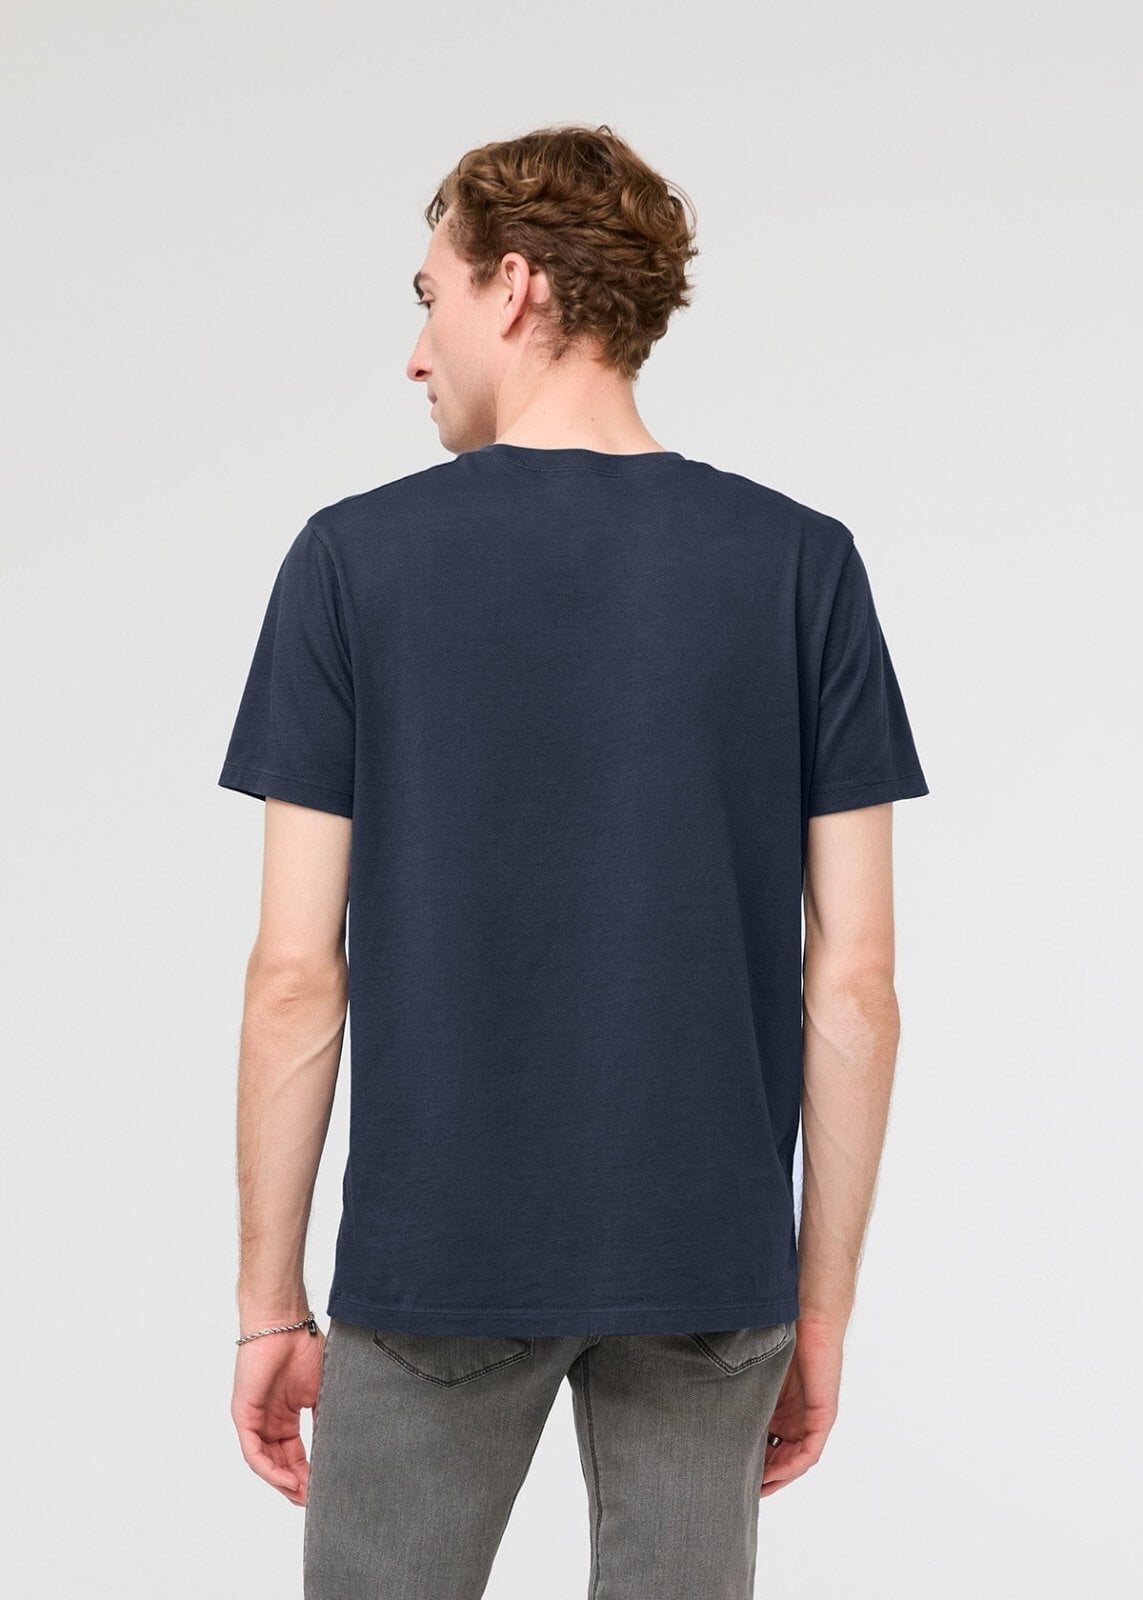 mens 100% pima cotton navy t-shirt back